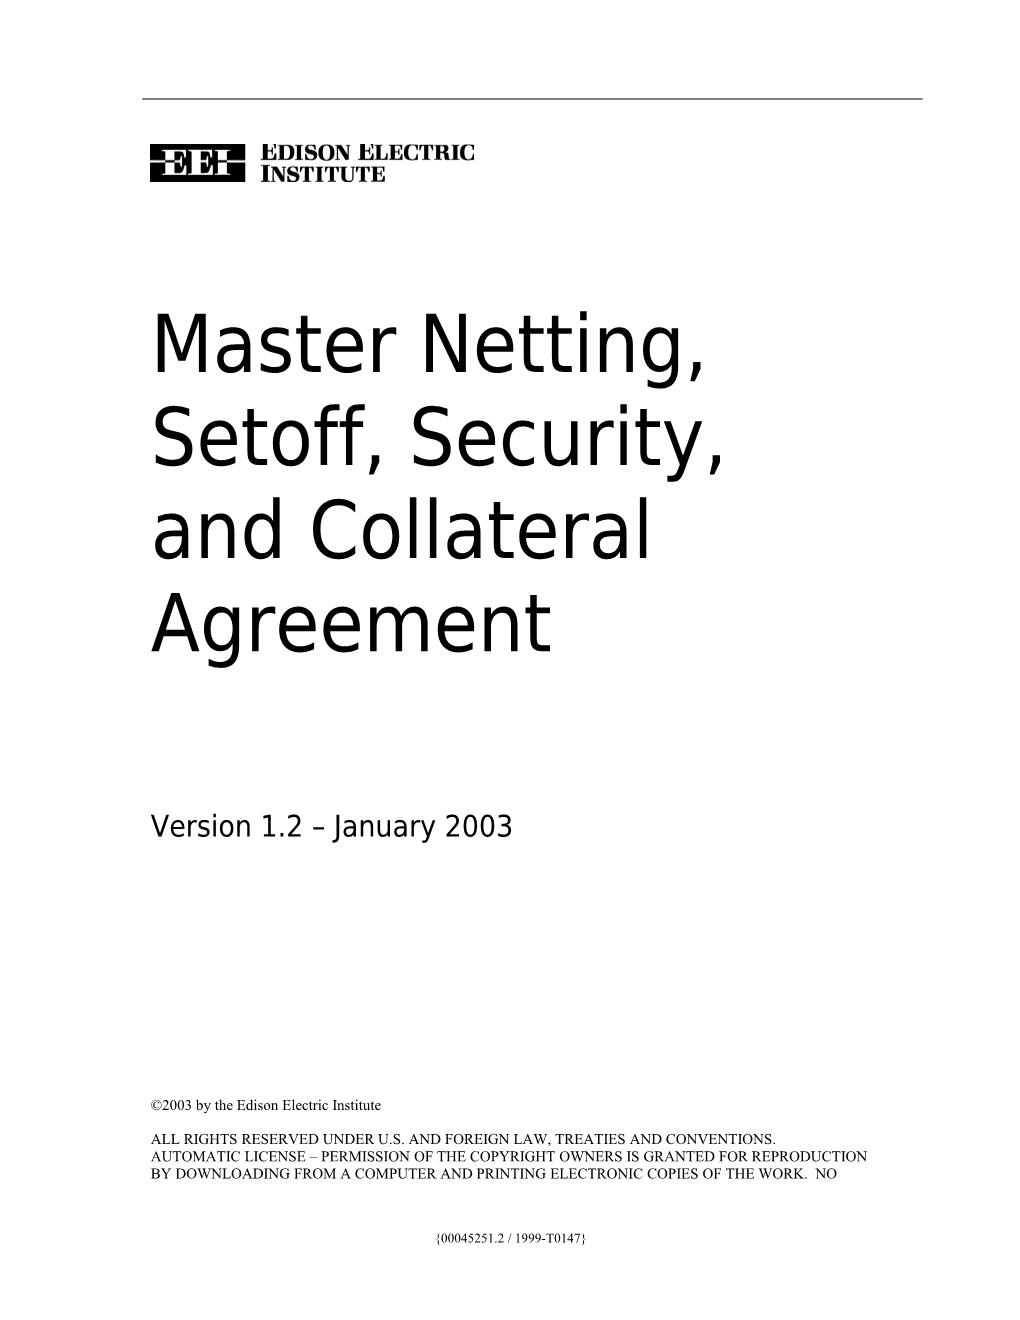 EEI Revised Master Netting Agreement - August 2005 (00045251;2)